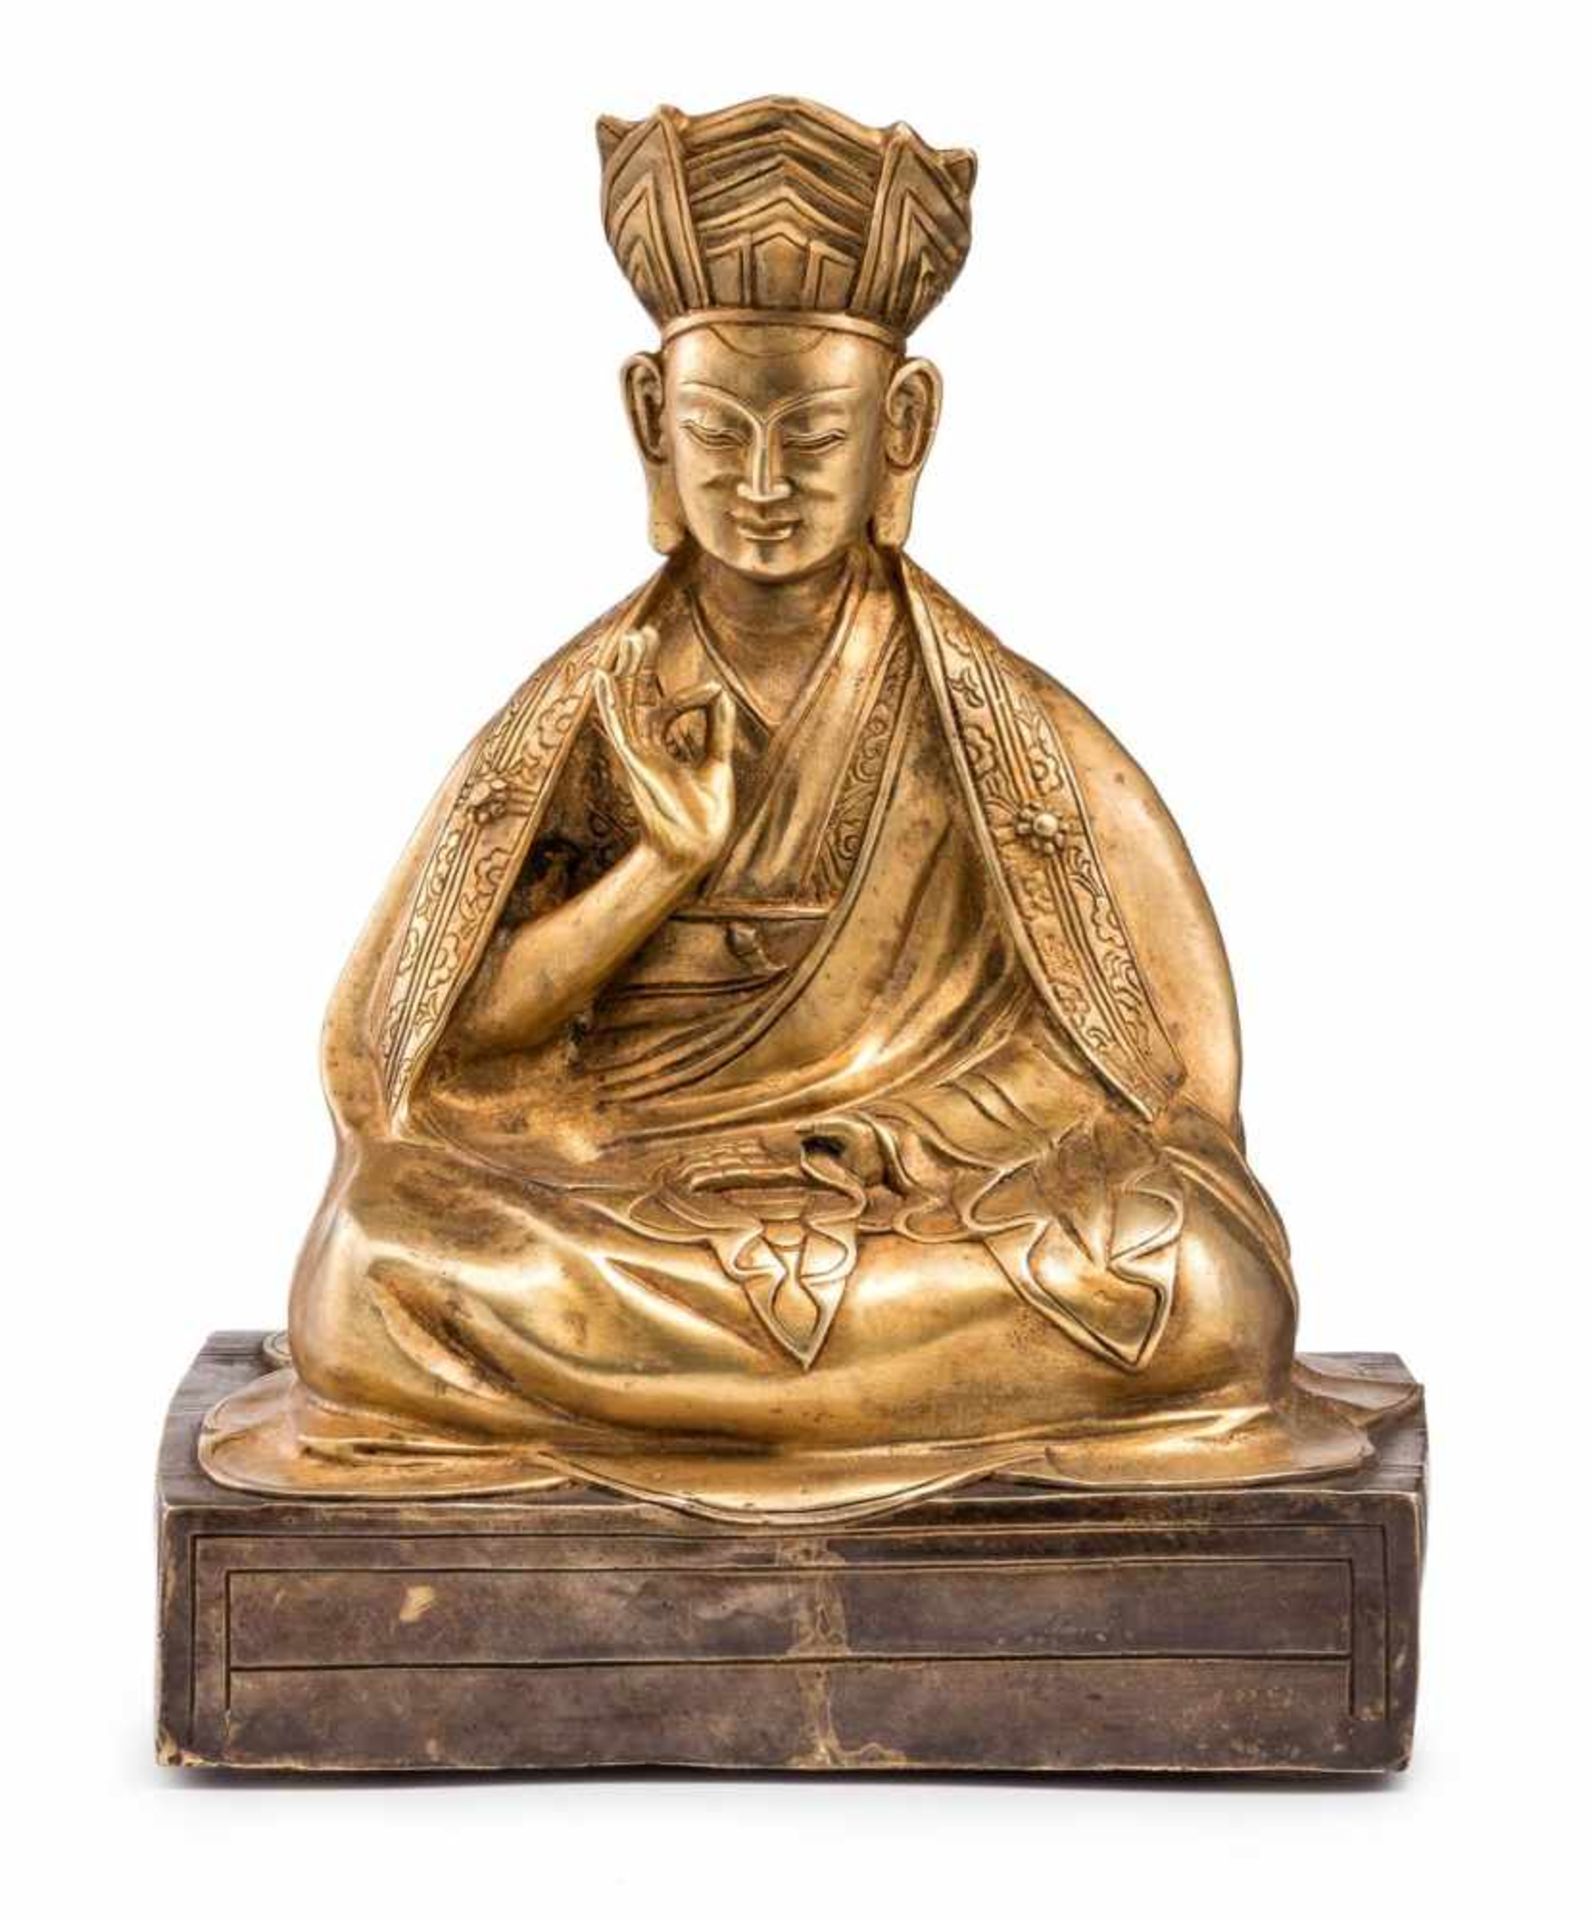 Lama der Rotmützen-Sektewohl Tibet, 19. Jh.Bronze, matt vergoldet. Die rechte Hand im Gestus des